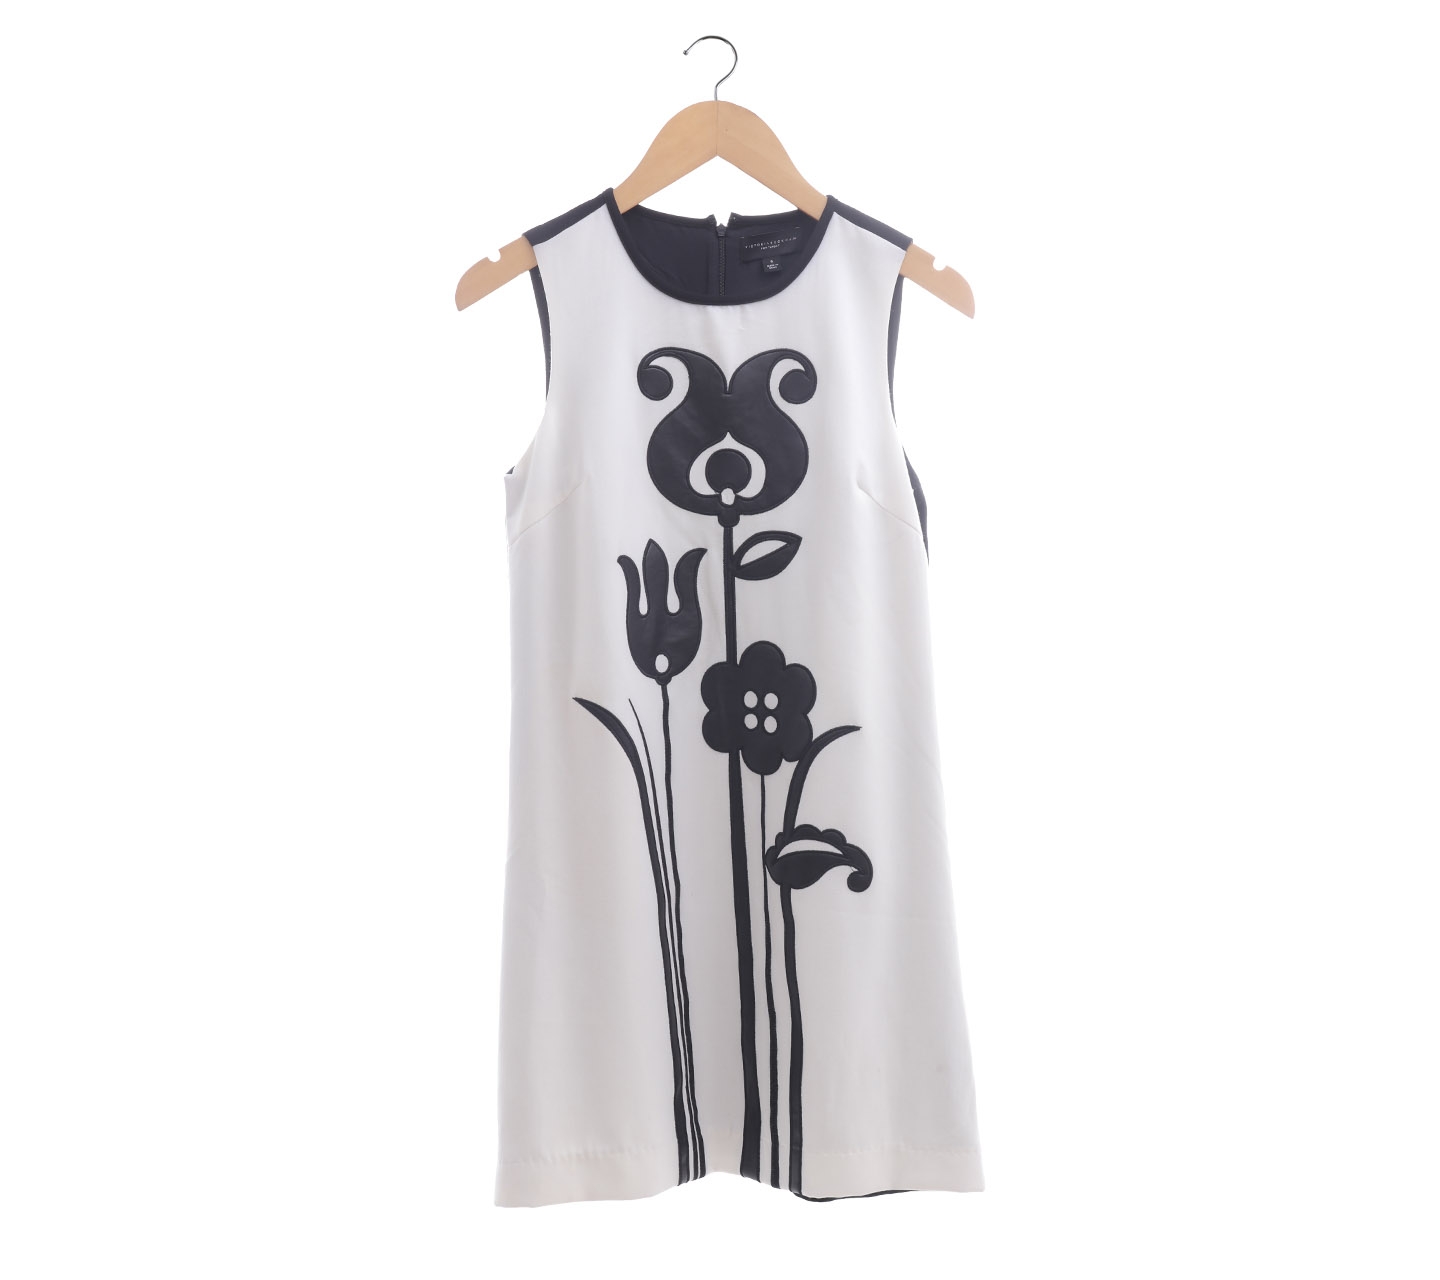 Victoria Beckham For Target White & Black Floral Mini Dress